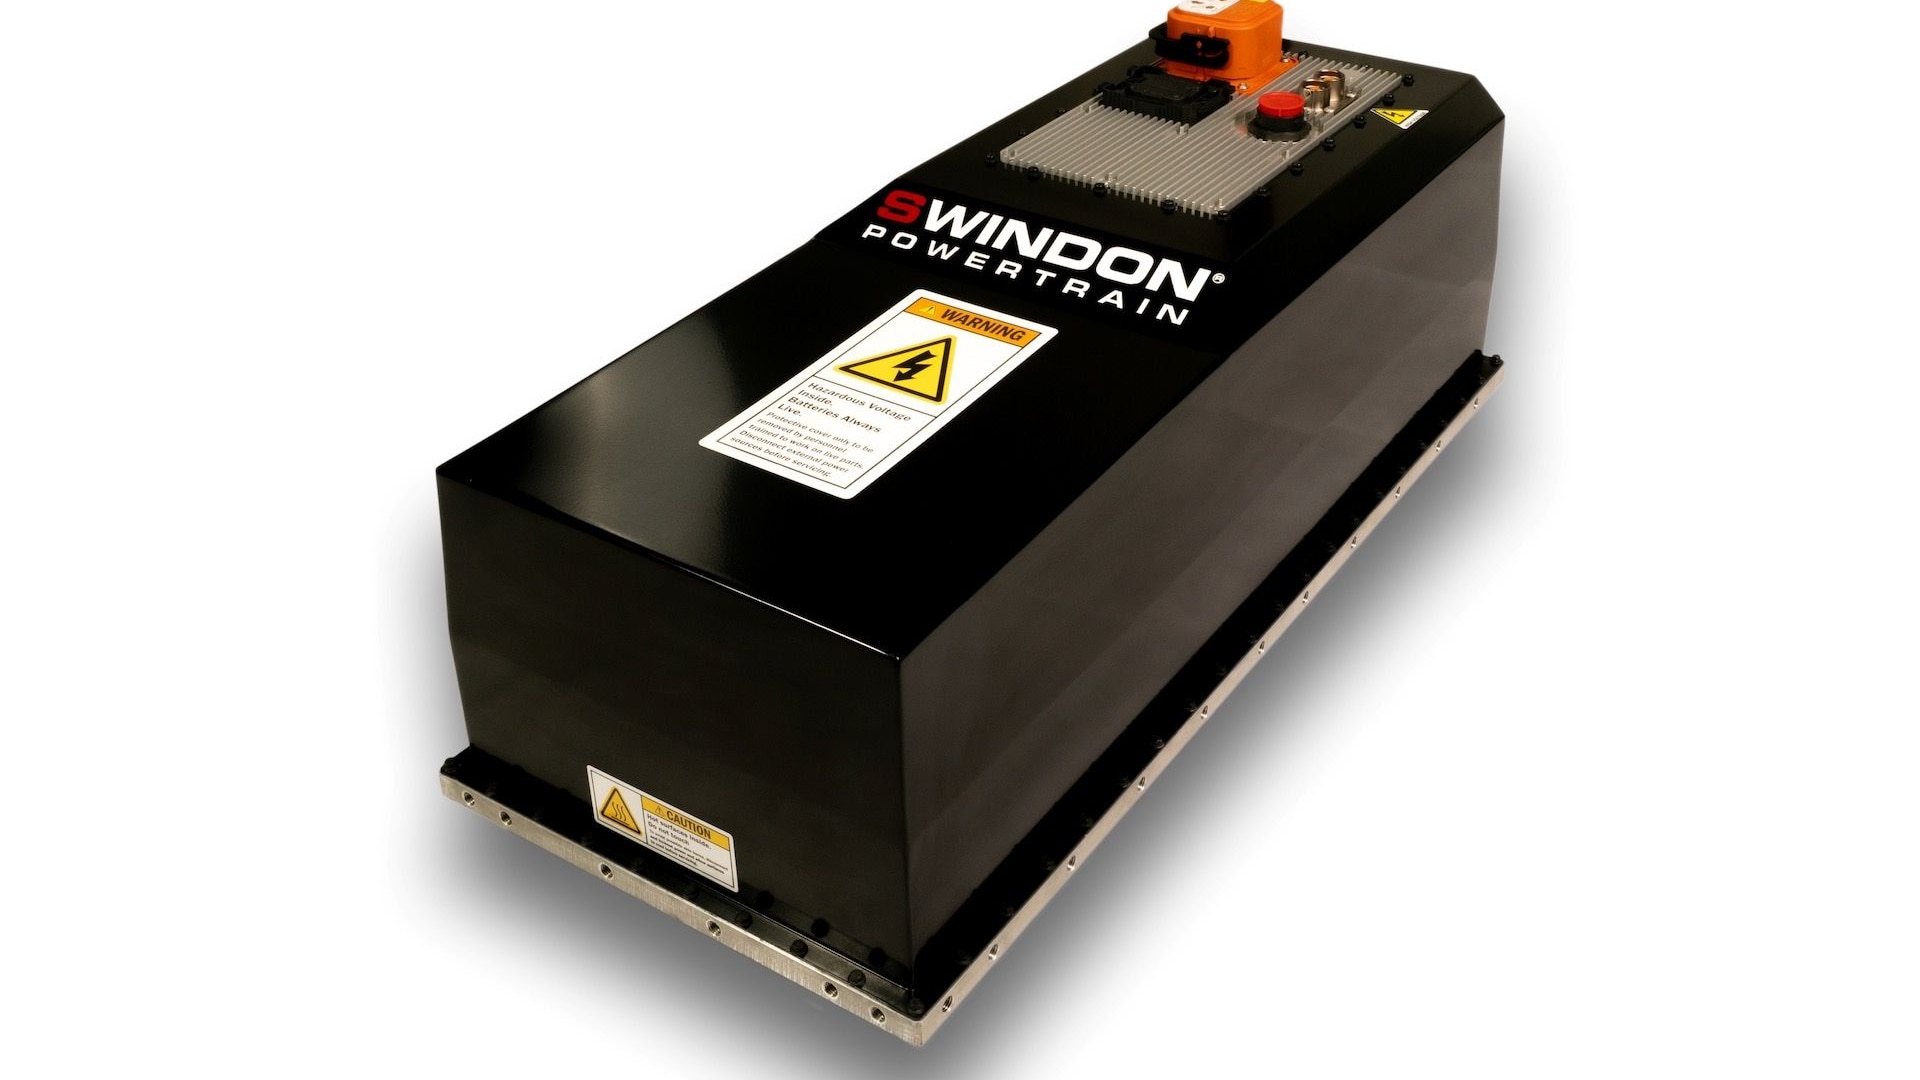 Swindown Powertrain HED 30-kwh battery pack